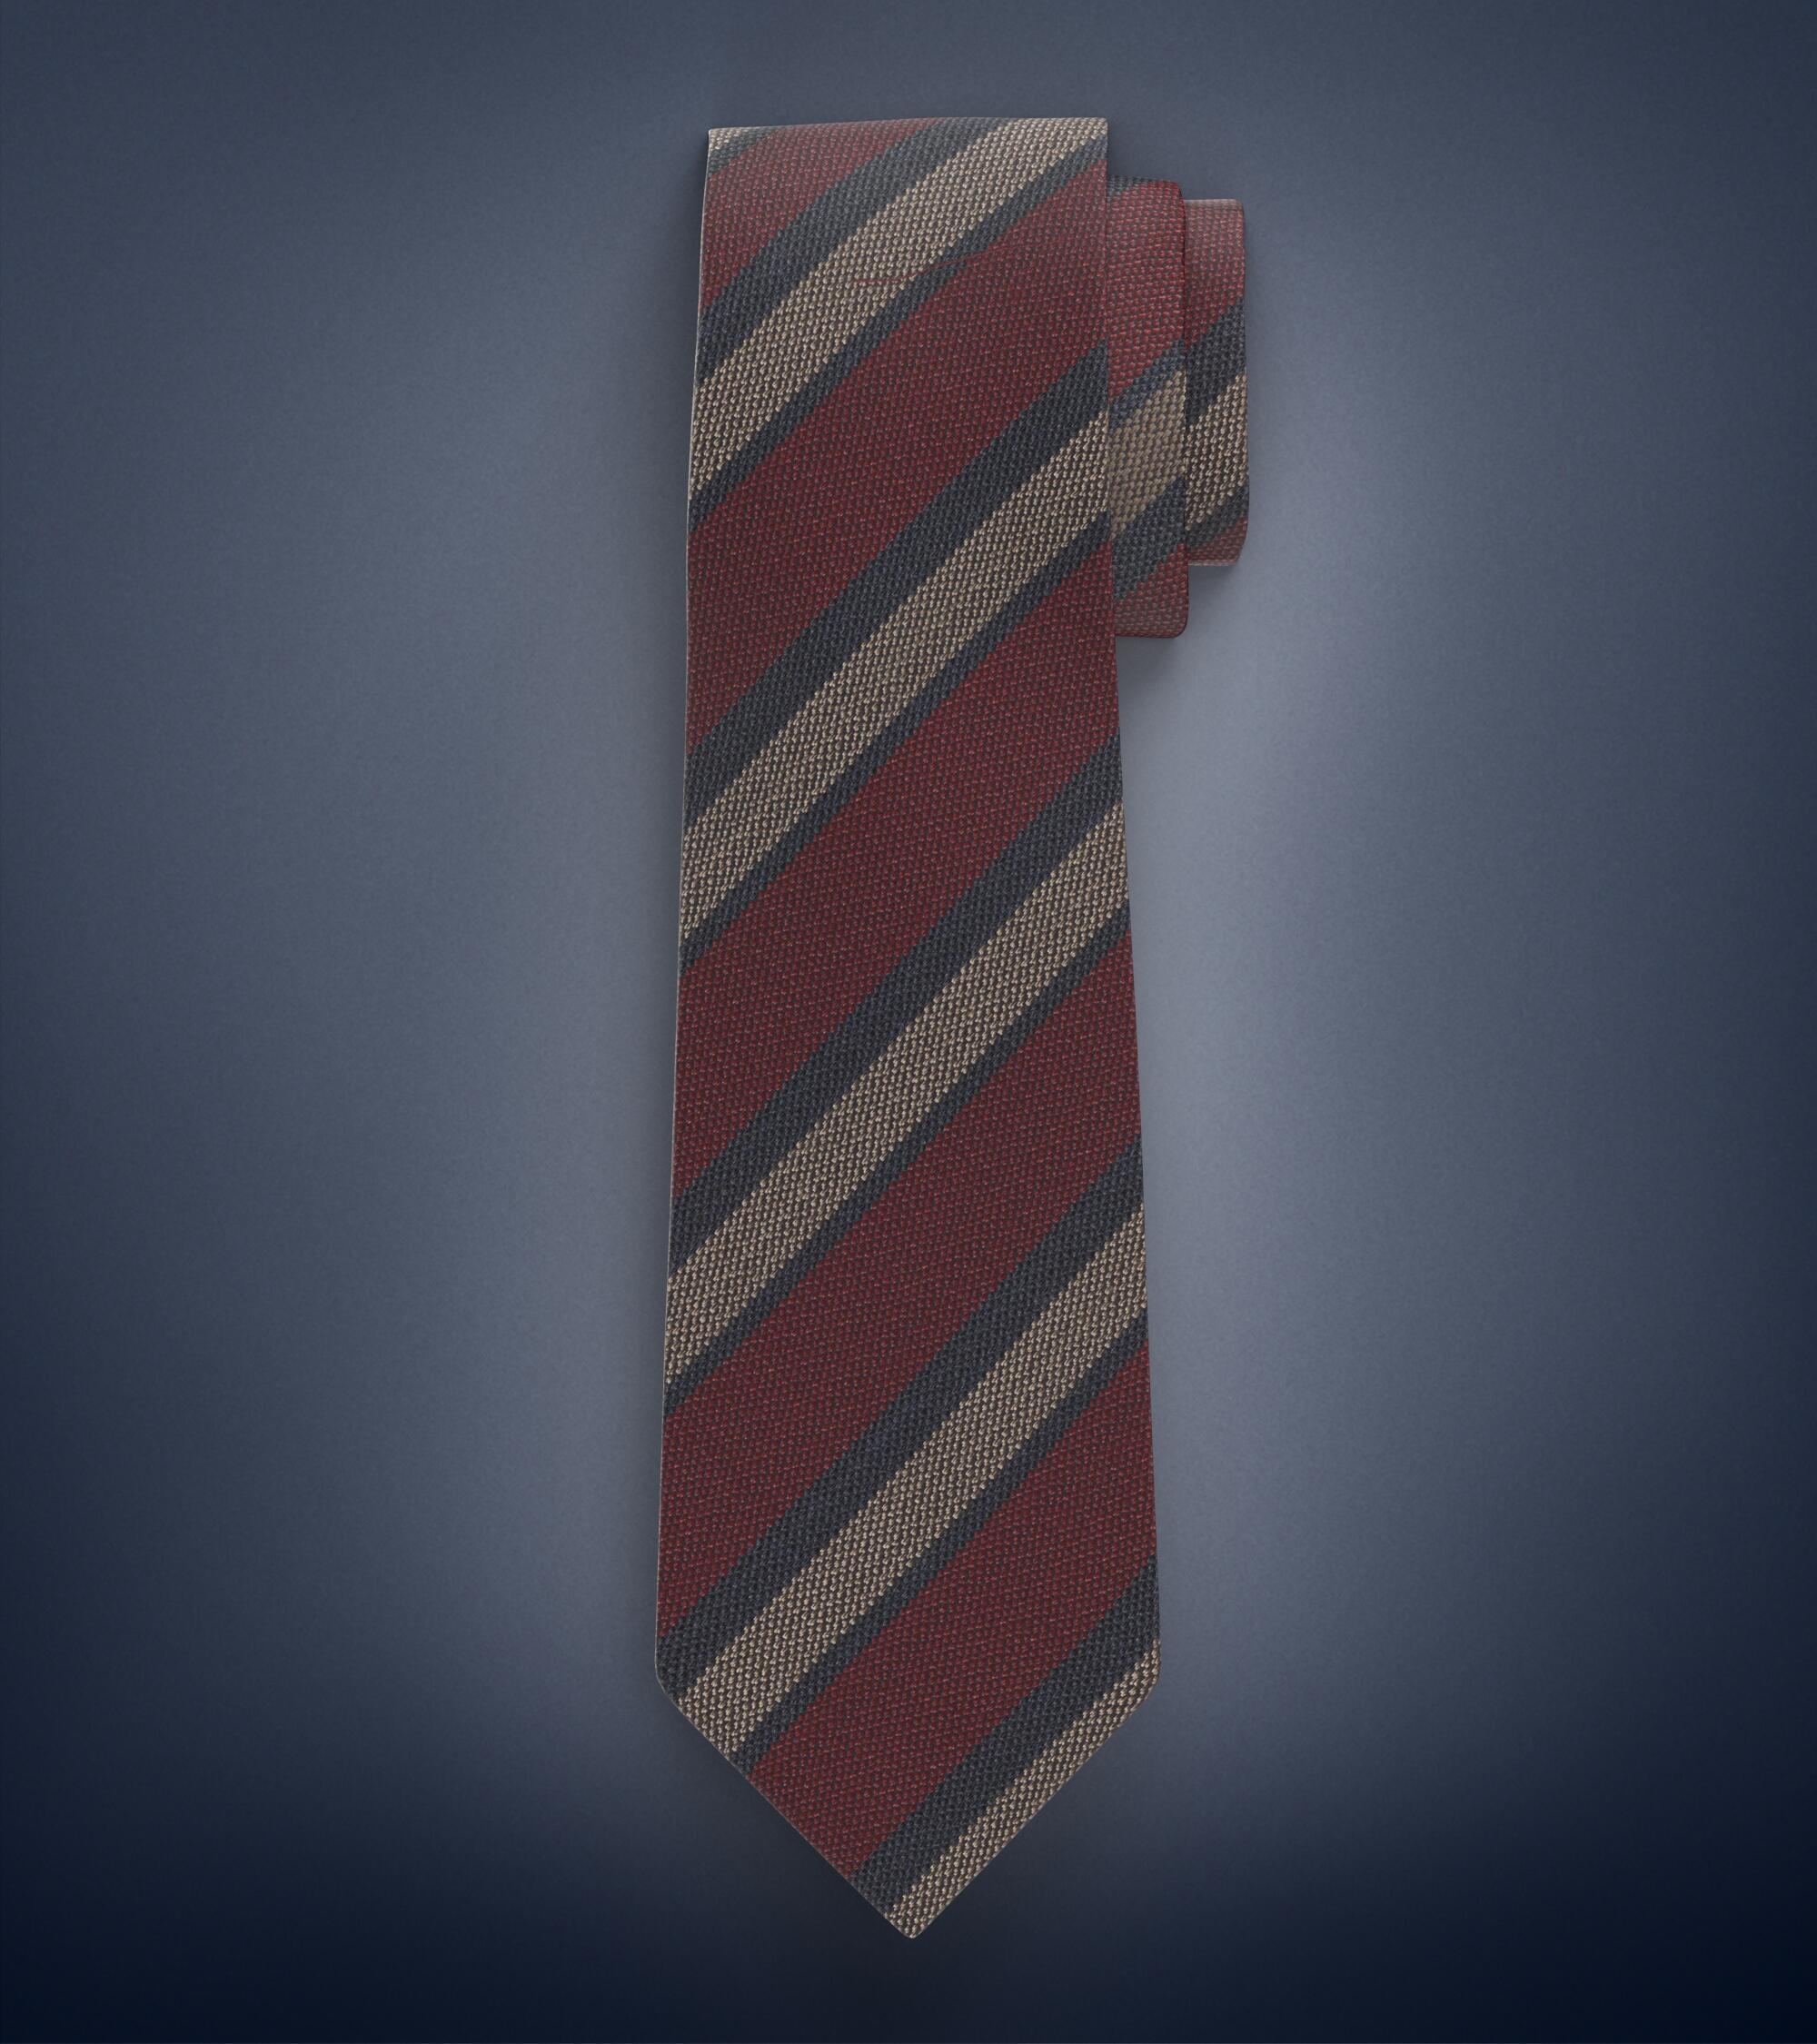 SIGNATURE SIGNATURE Krawatte Deutschland | OLYMP OLYMP